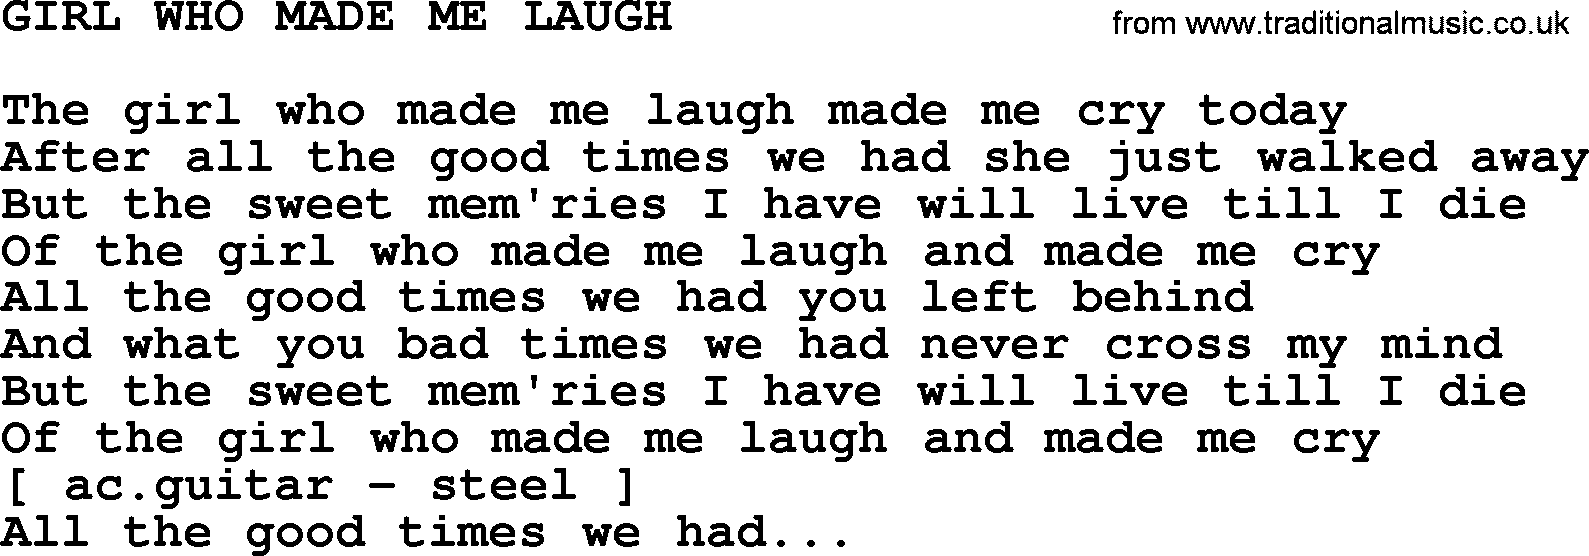 Merle Haggard song: Girl Who Made Me Laugh, lyrics.